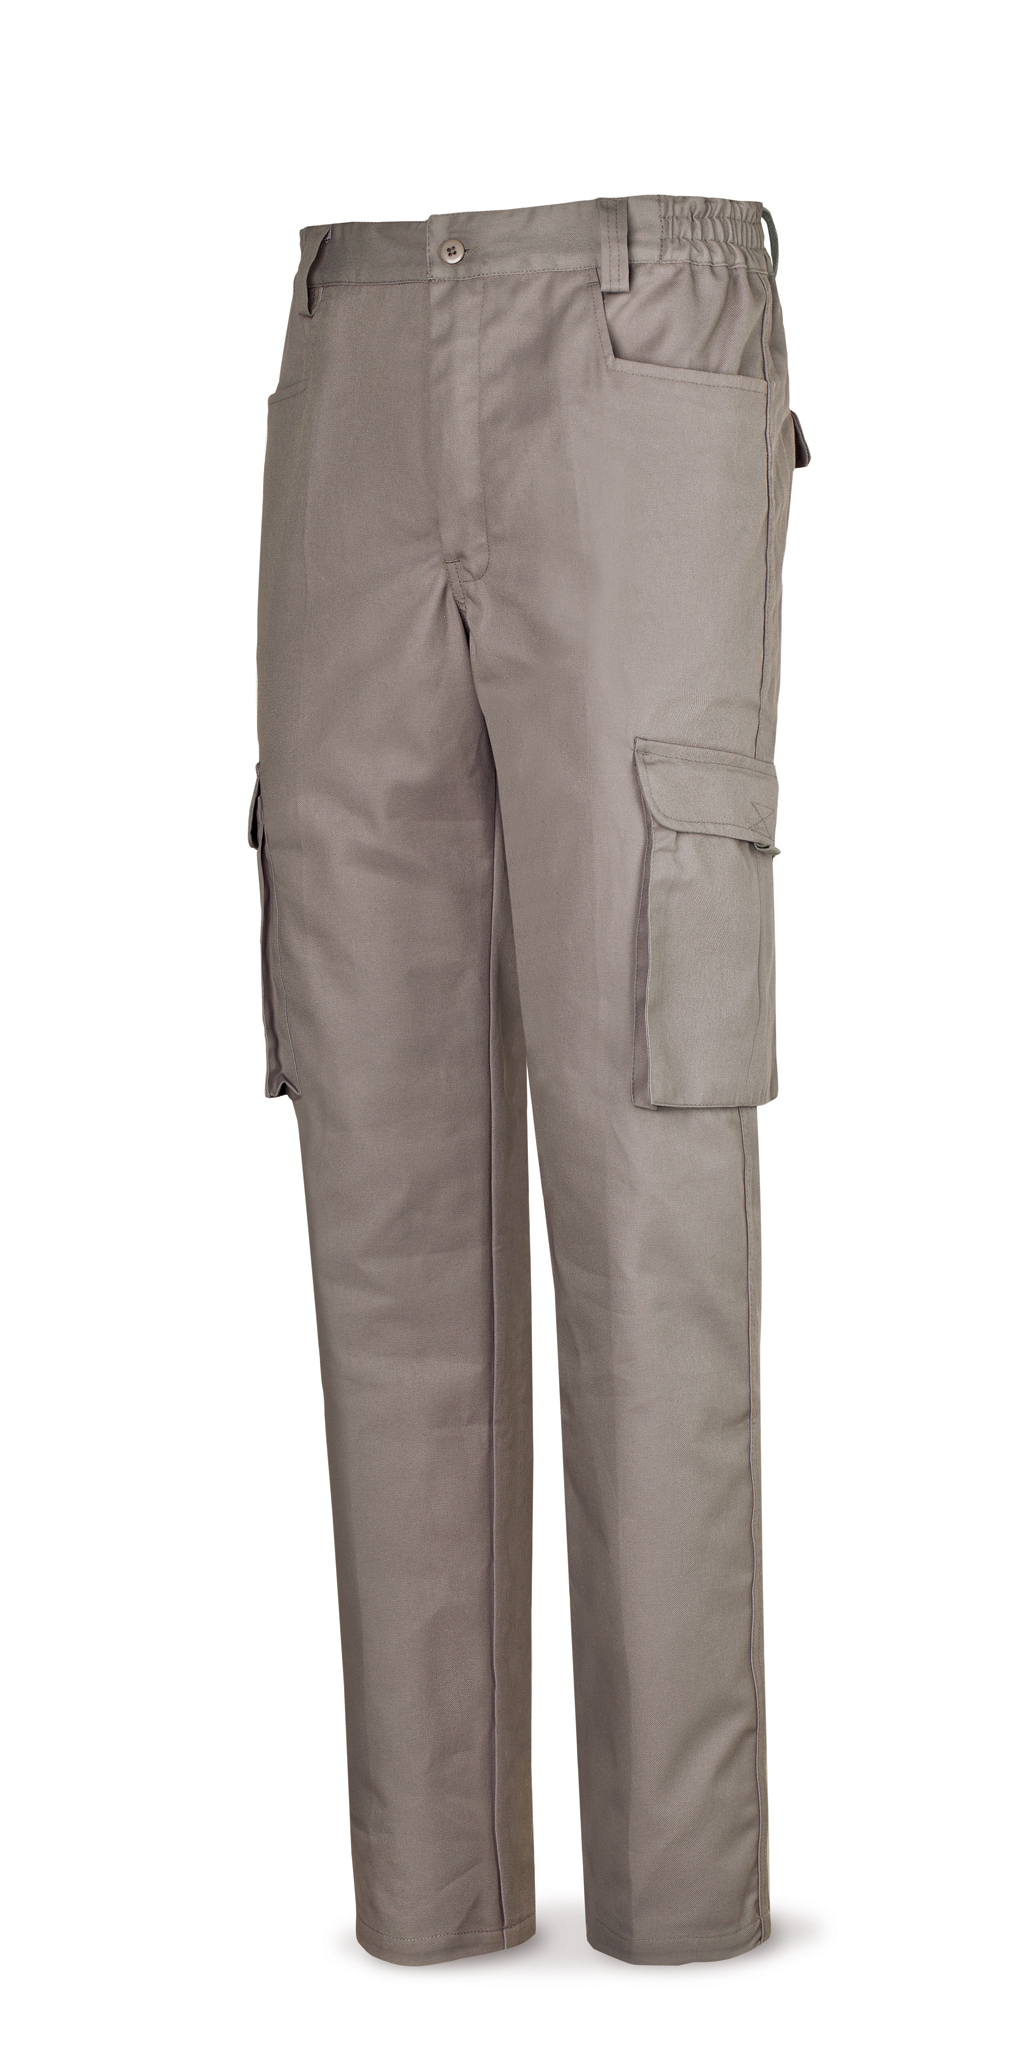 488-PG Top Vestuario Laboral Serie Top Pantalón gris tergal de 245 g. 